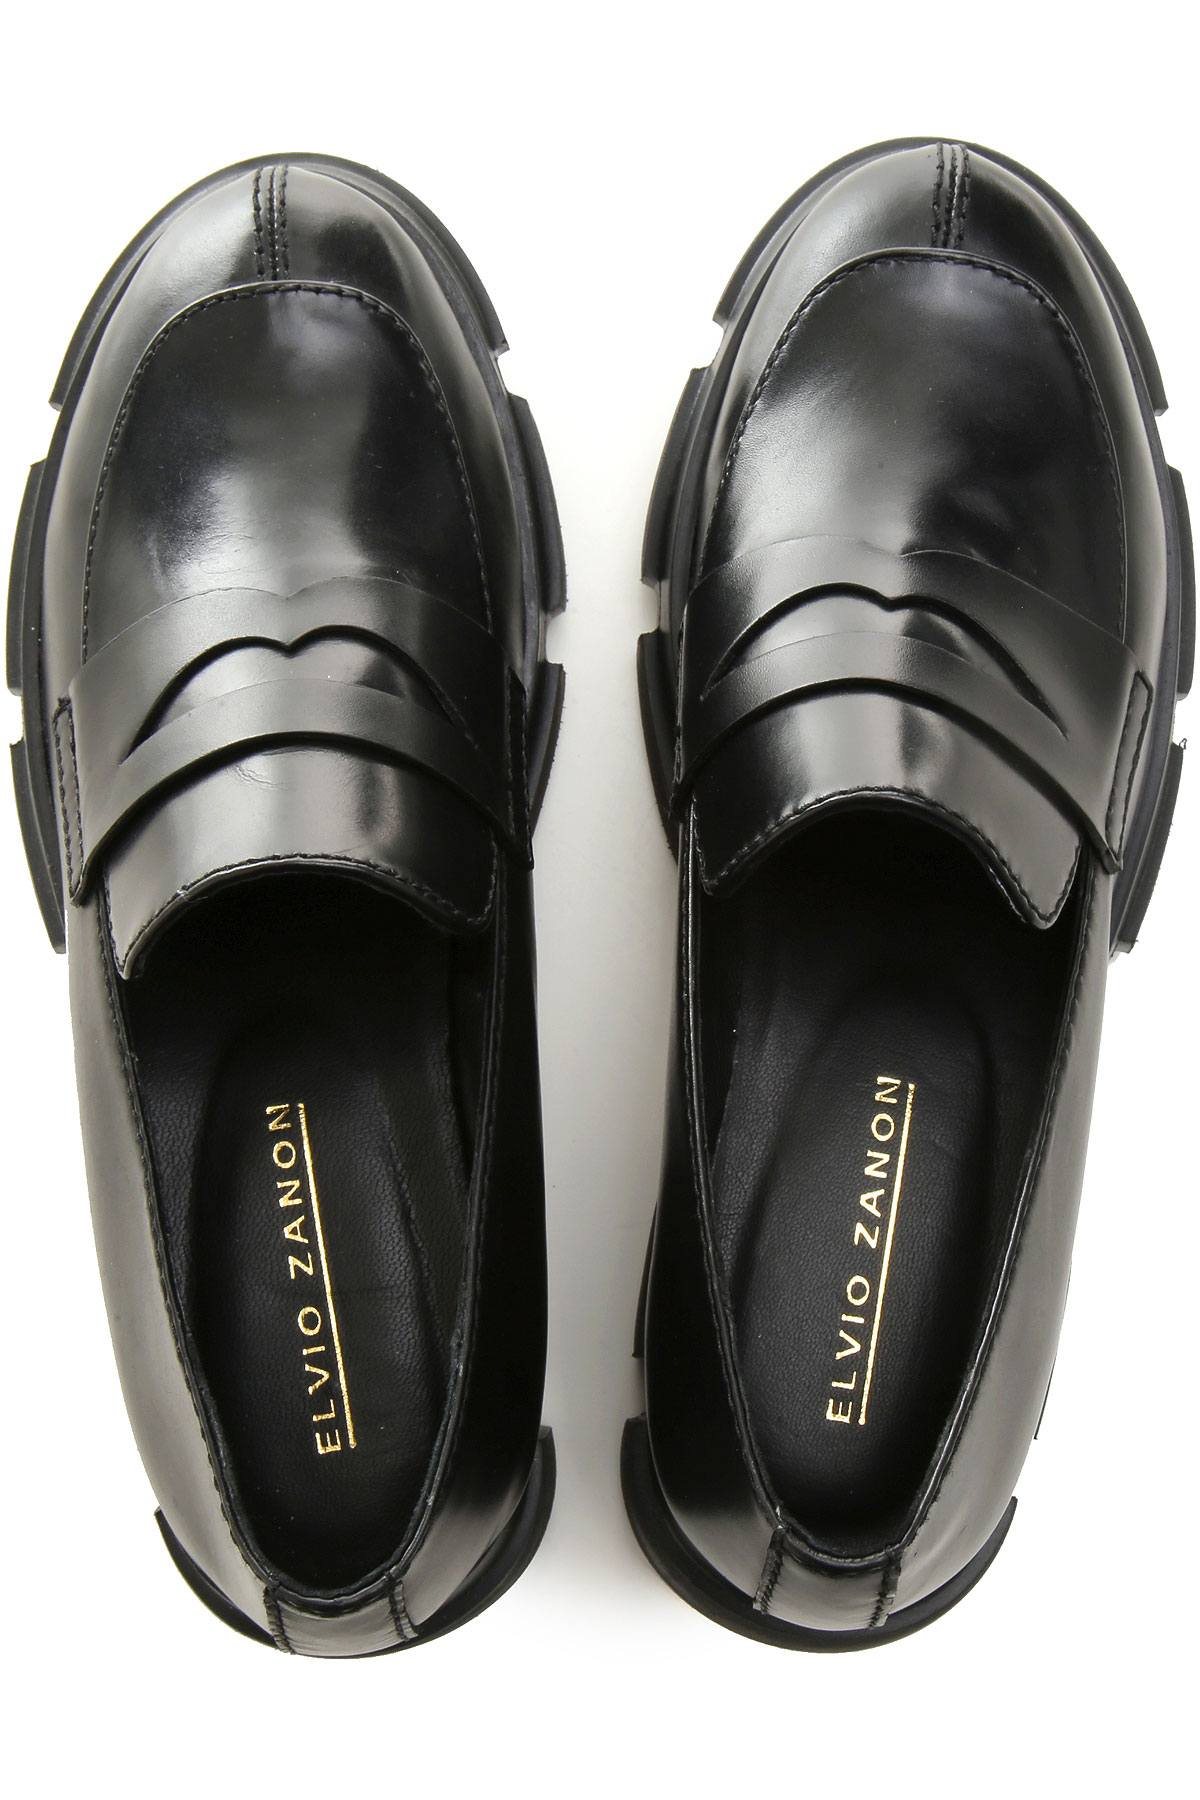 verklaren Welsprekend Auto Womens Shoes Elvio Zanon, Style code: em0102x-massetto-nero